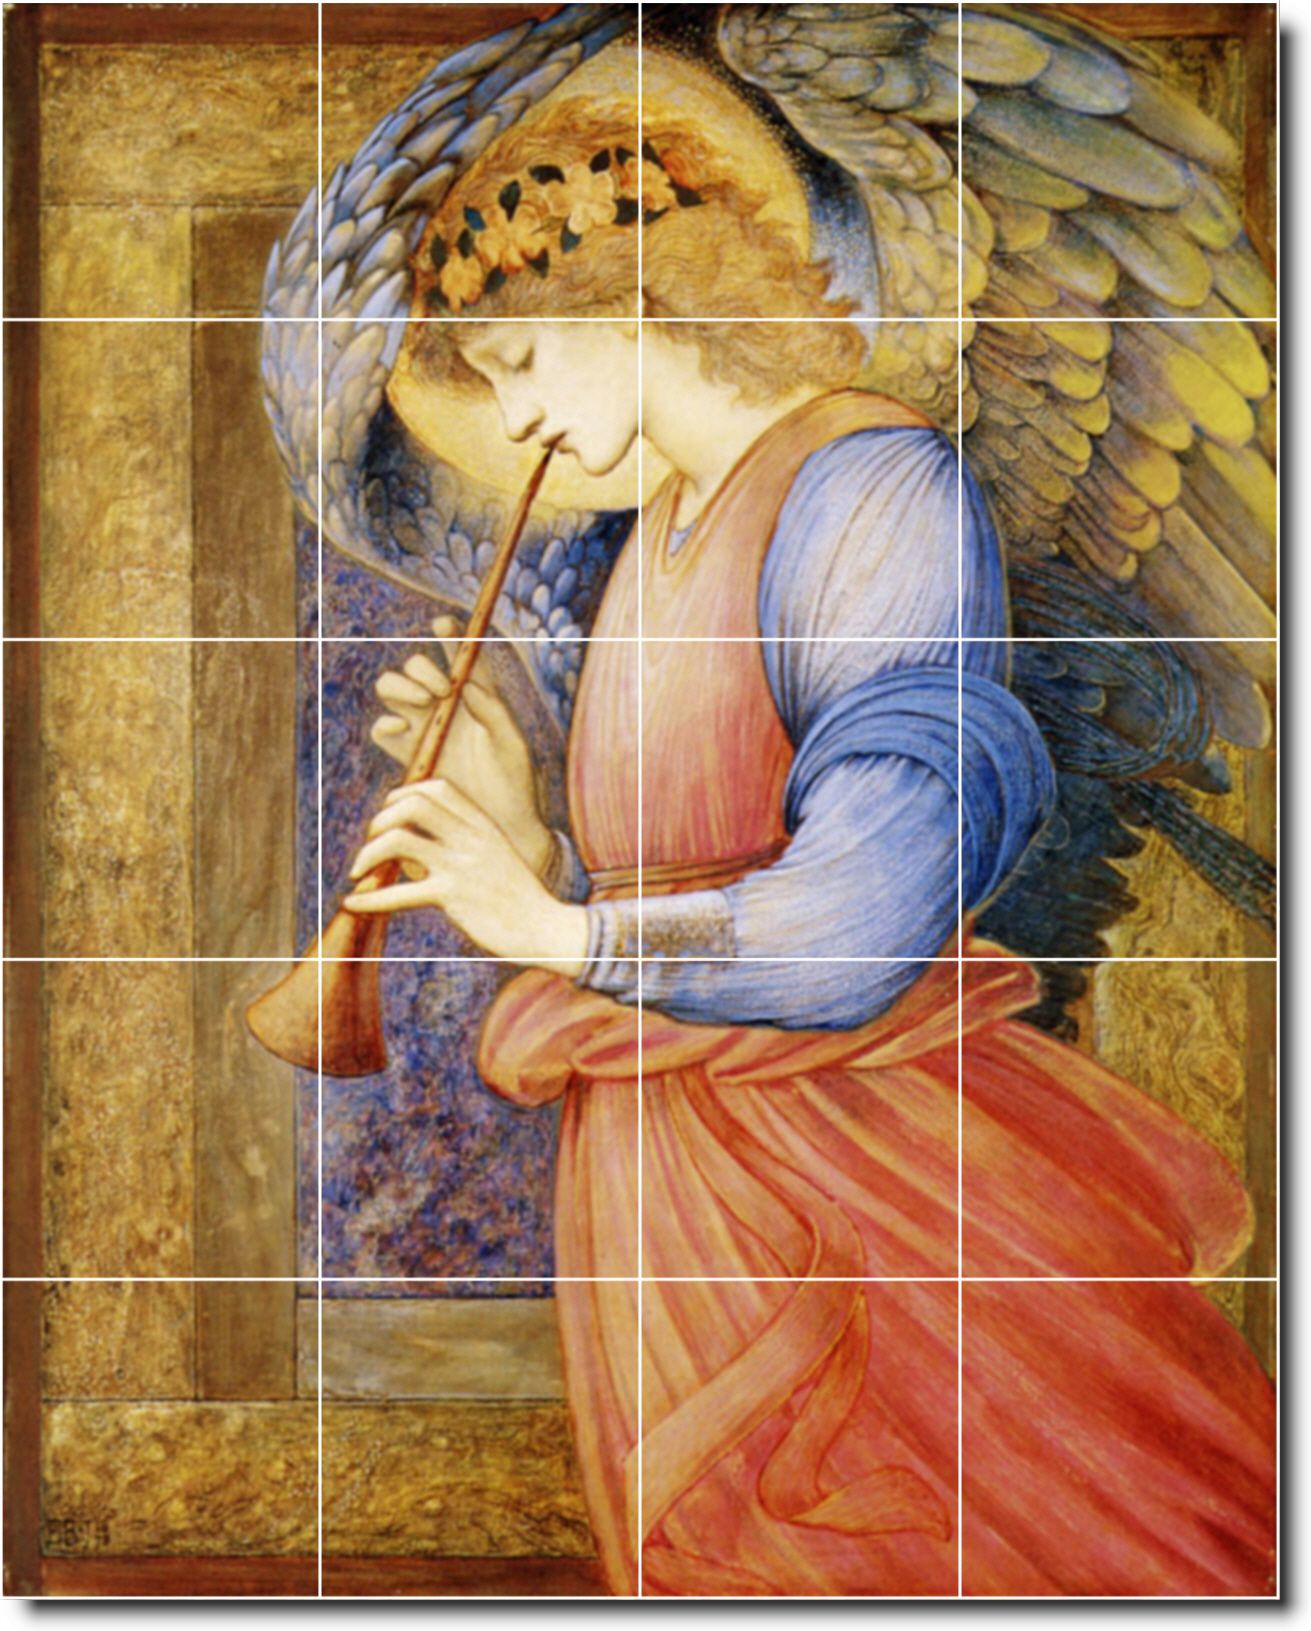 angel by edward burne jones 30x24 inch ceramic tile mural using 20 6x6 